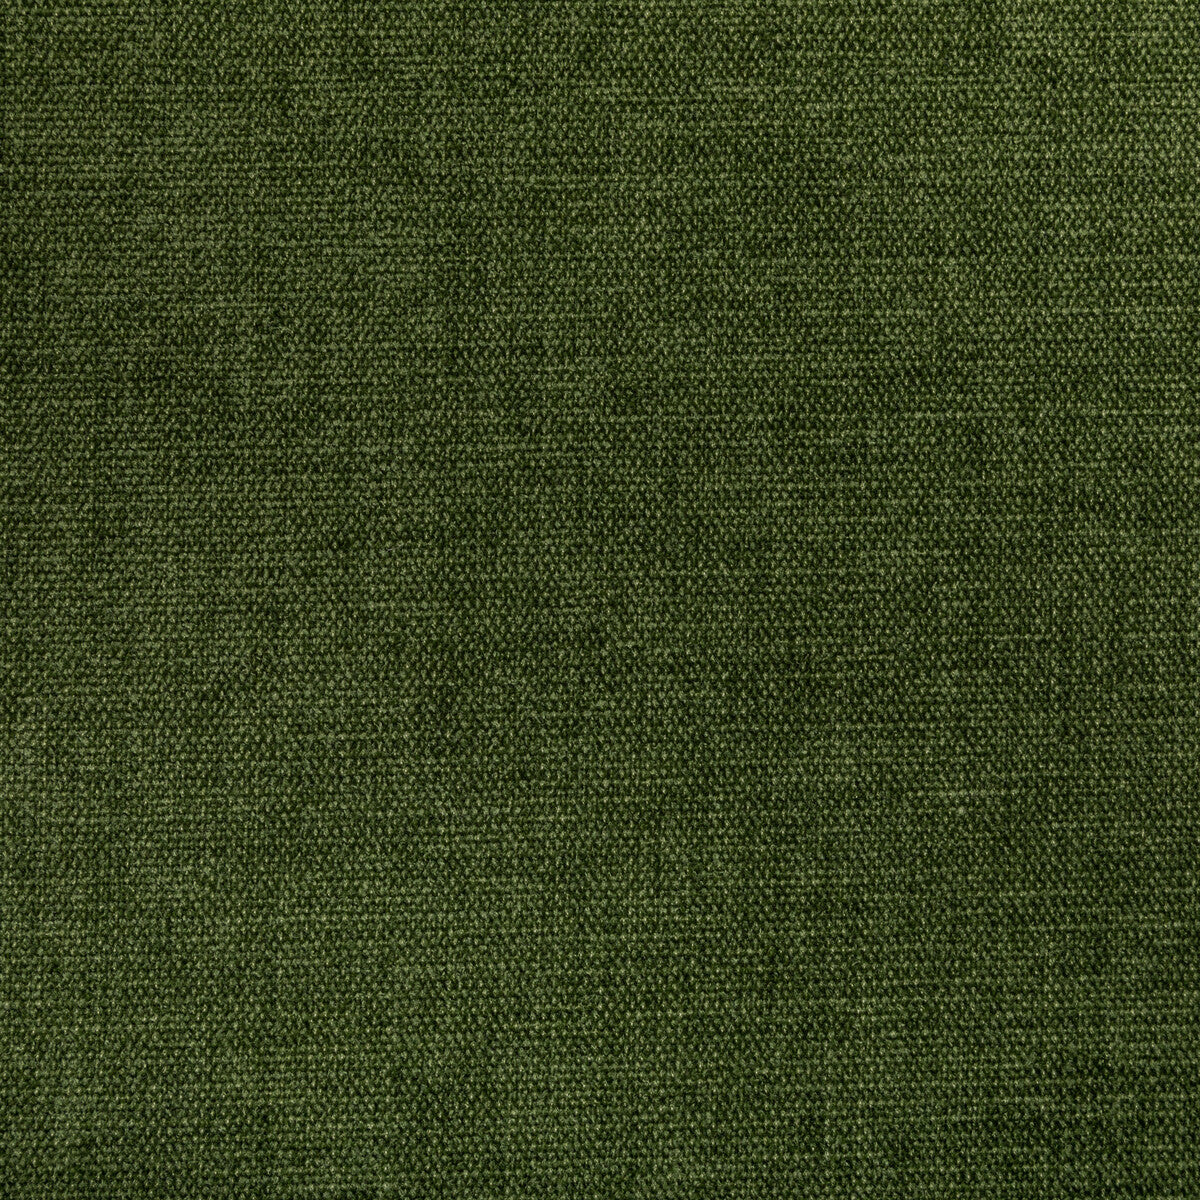 Kravet Smart fabric in 34959-2323 color - pattern 34959.2323.0 - by Kravet Smart in the Performance Kravetarmor collection